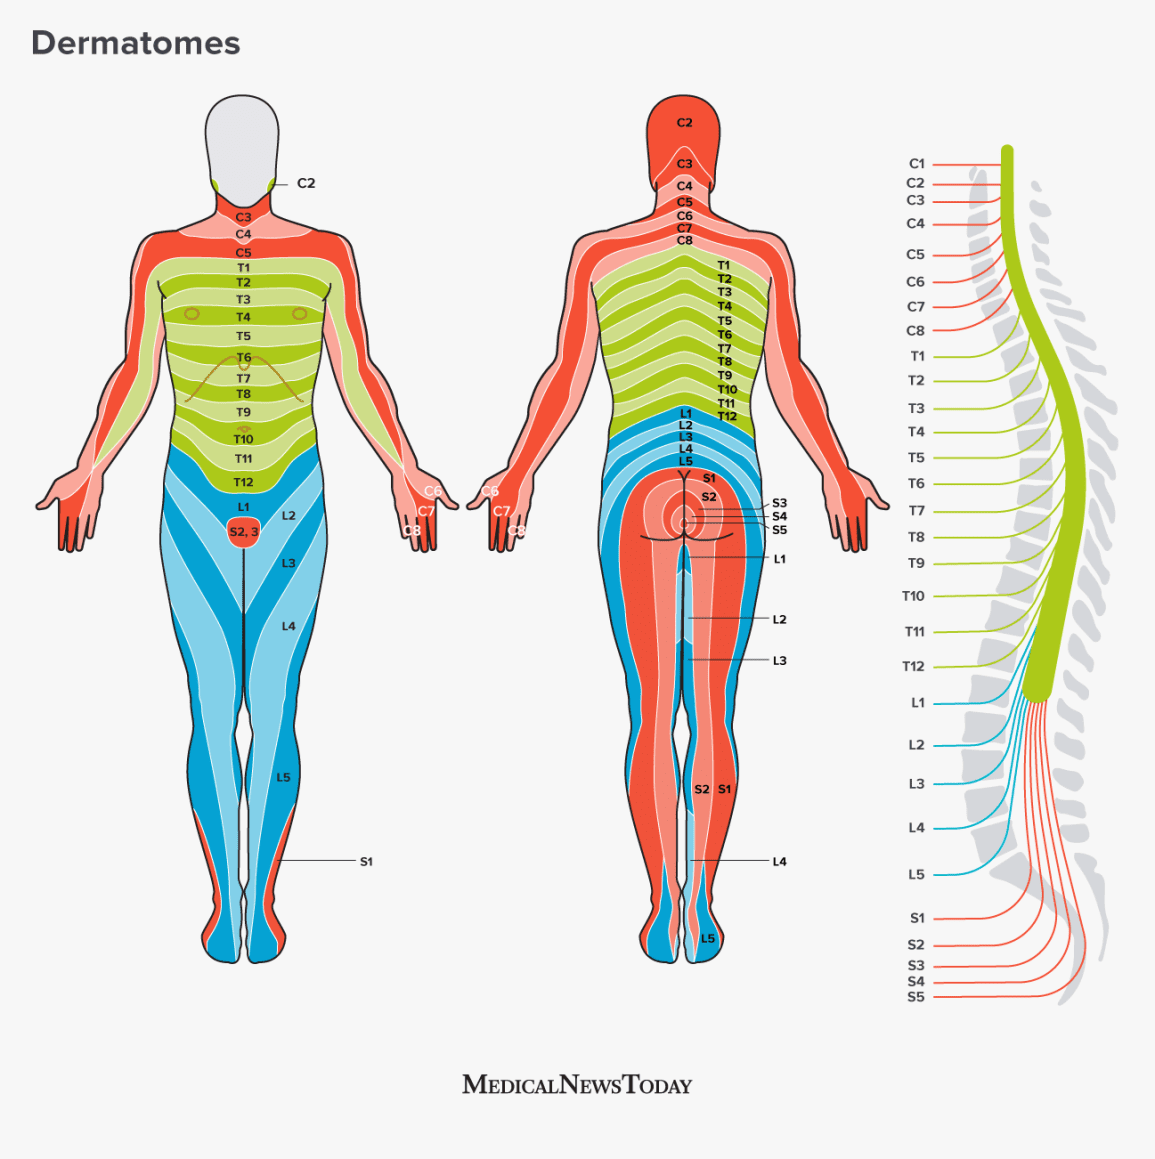 a illustration showing dermatomes